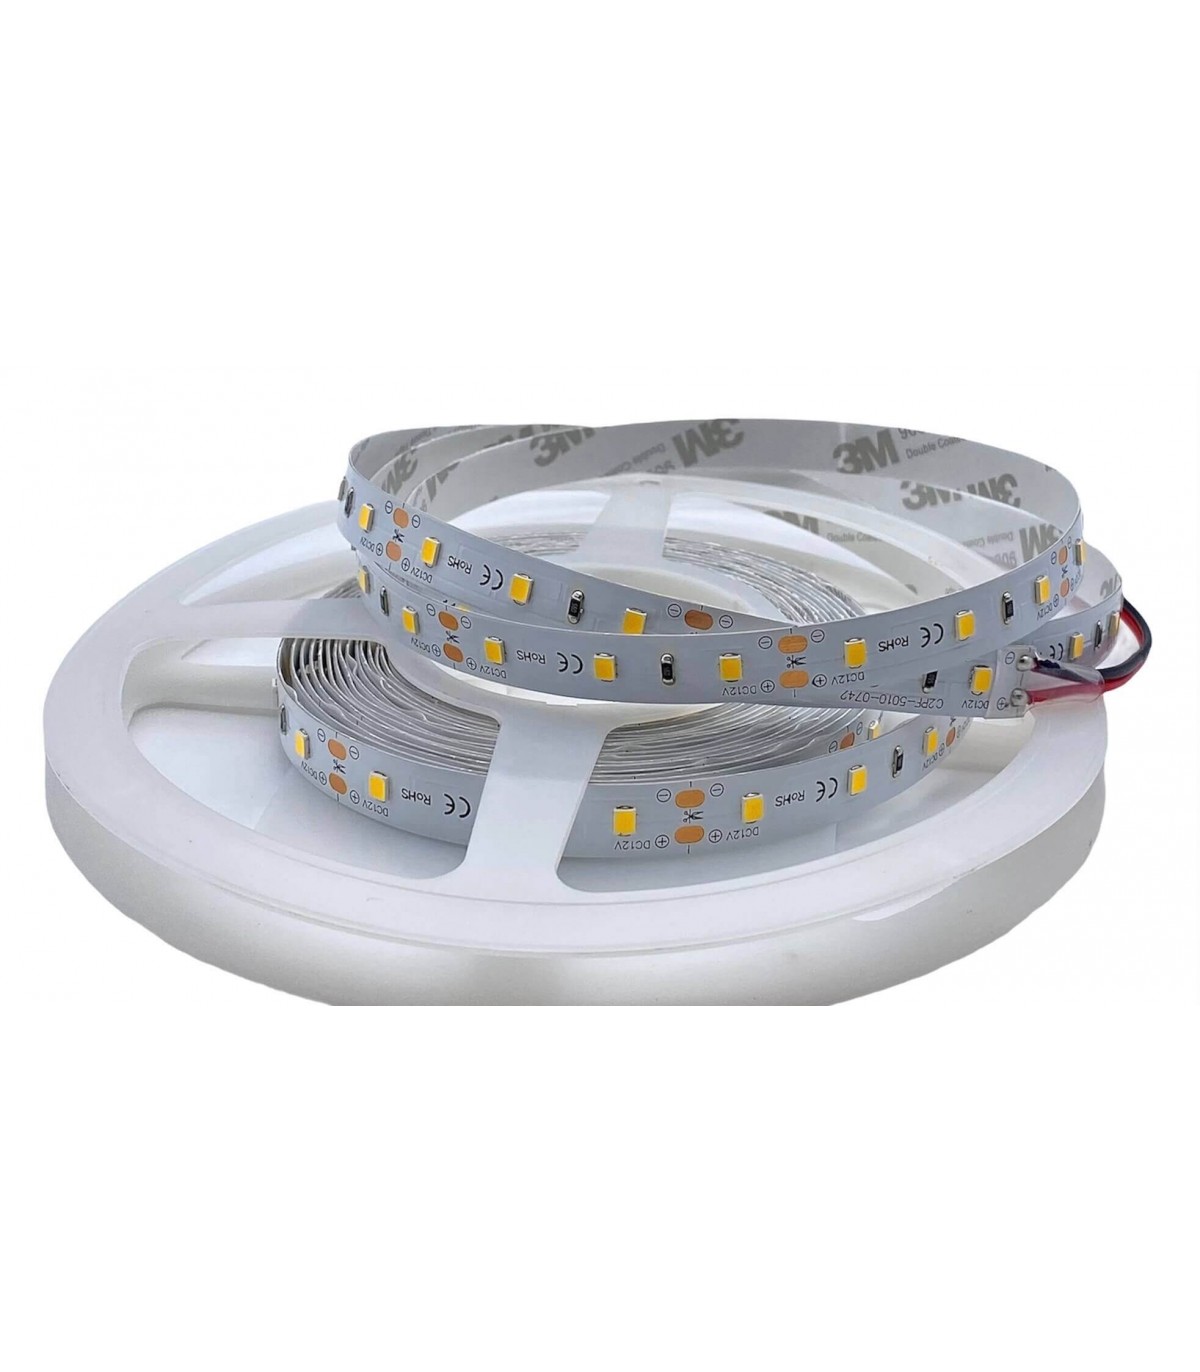 Ruban LED 5m flexible 9.6W/m étanche IP65 Lumière blanche